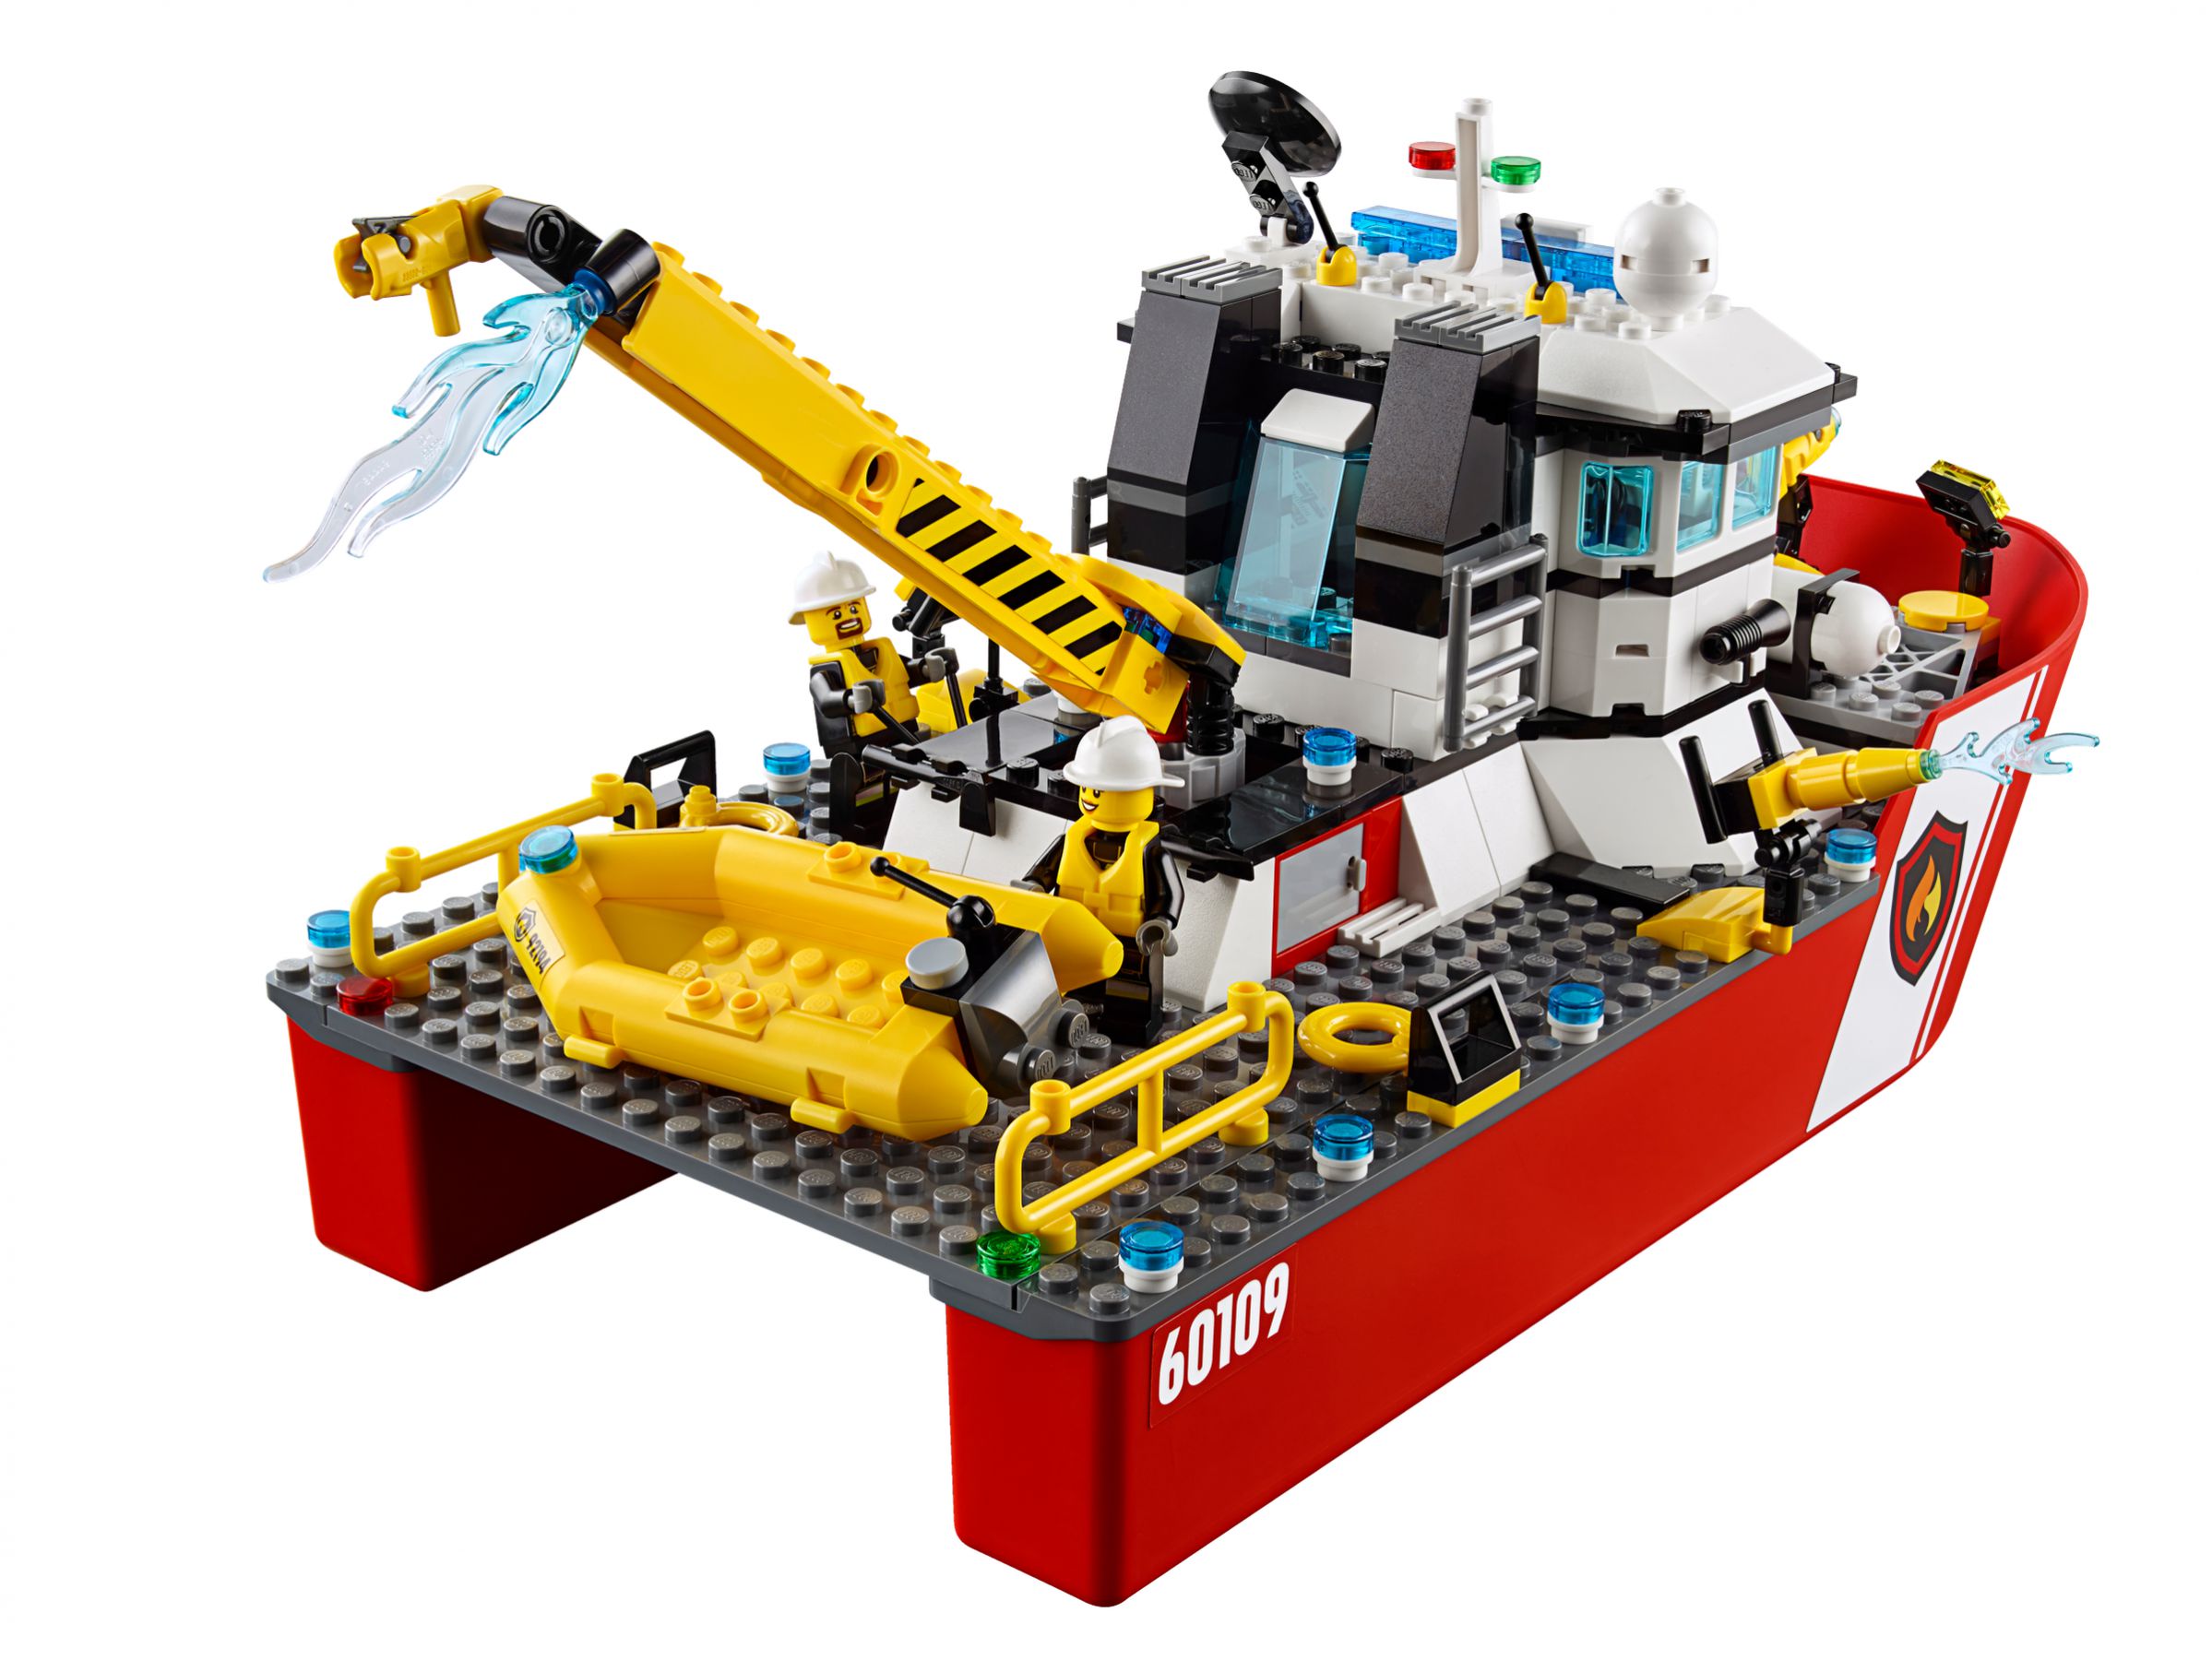 LEGO City 60109 Feuerwehrschiff LEGO_60109_alt4.jpg